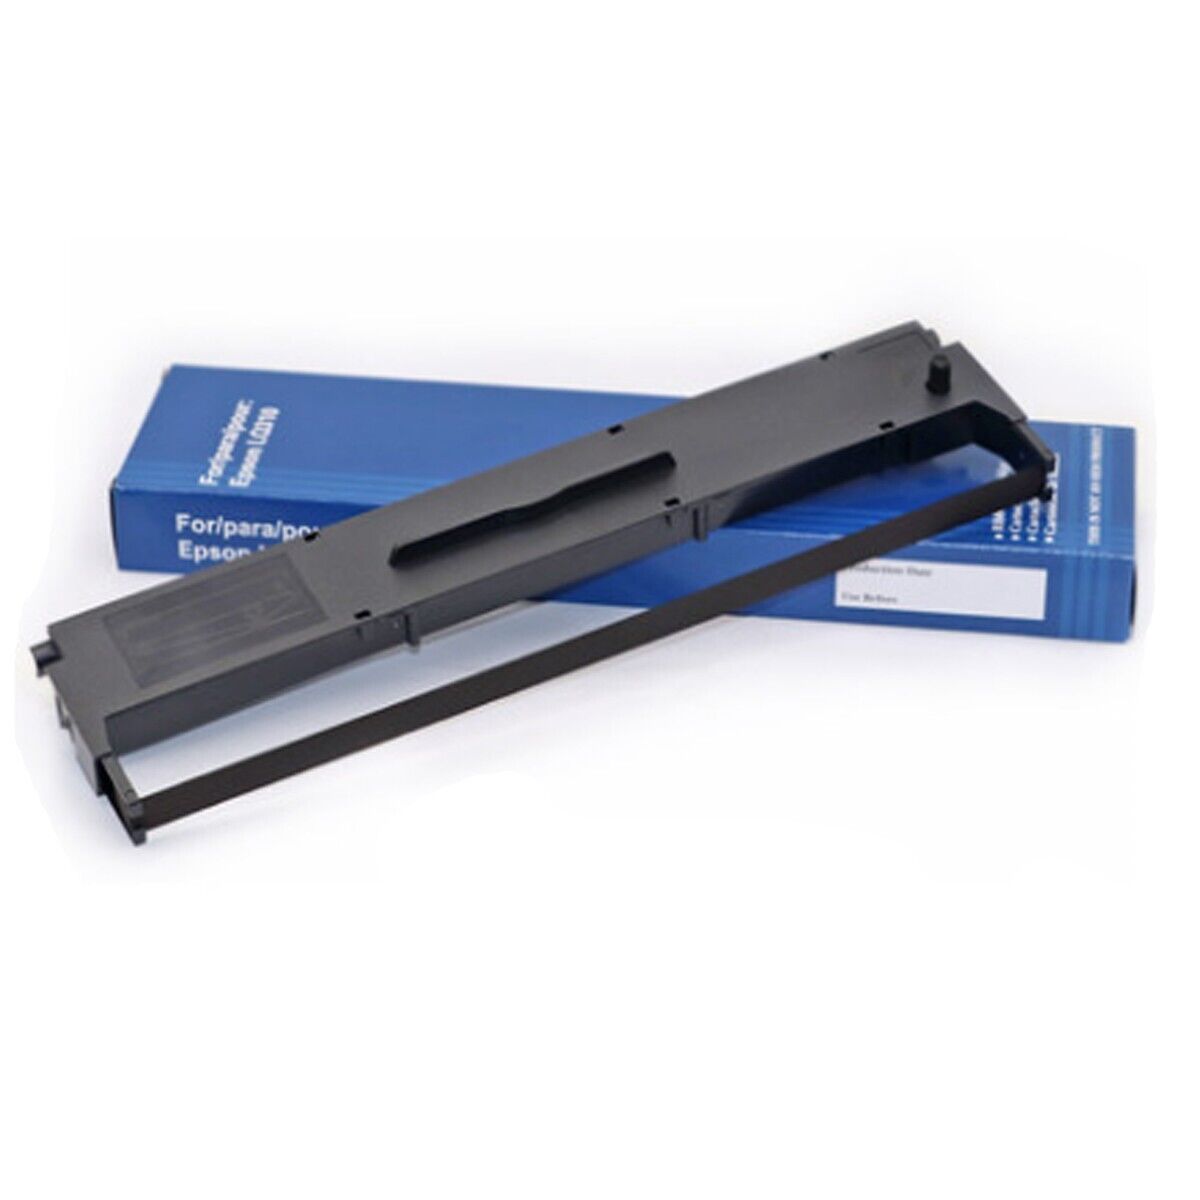 S015639 Ribbon Cartridge Black for Epson LX310 350 S015634 Dot Matrix Printer